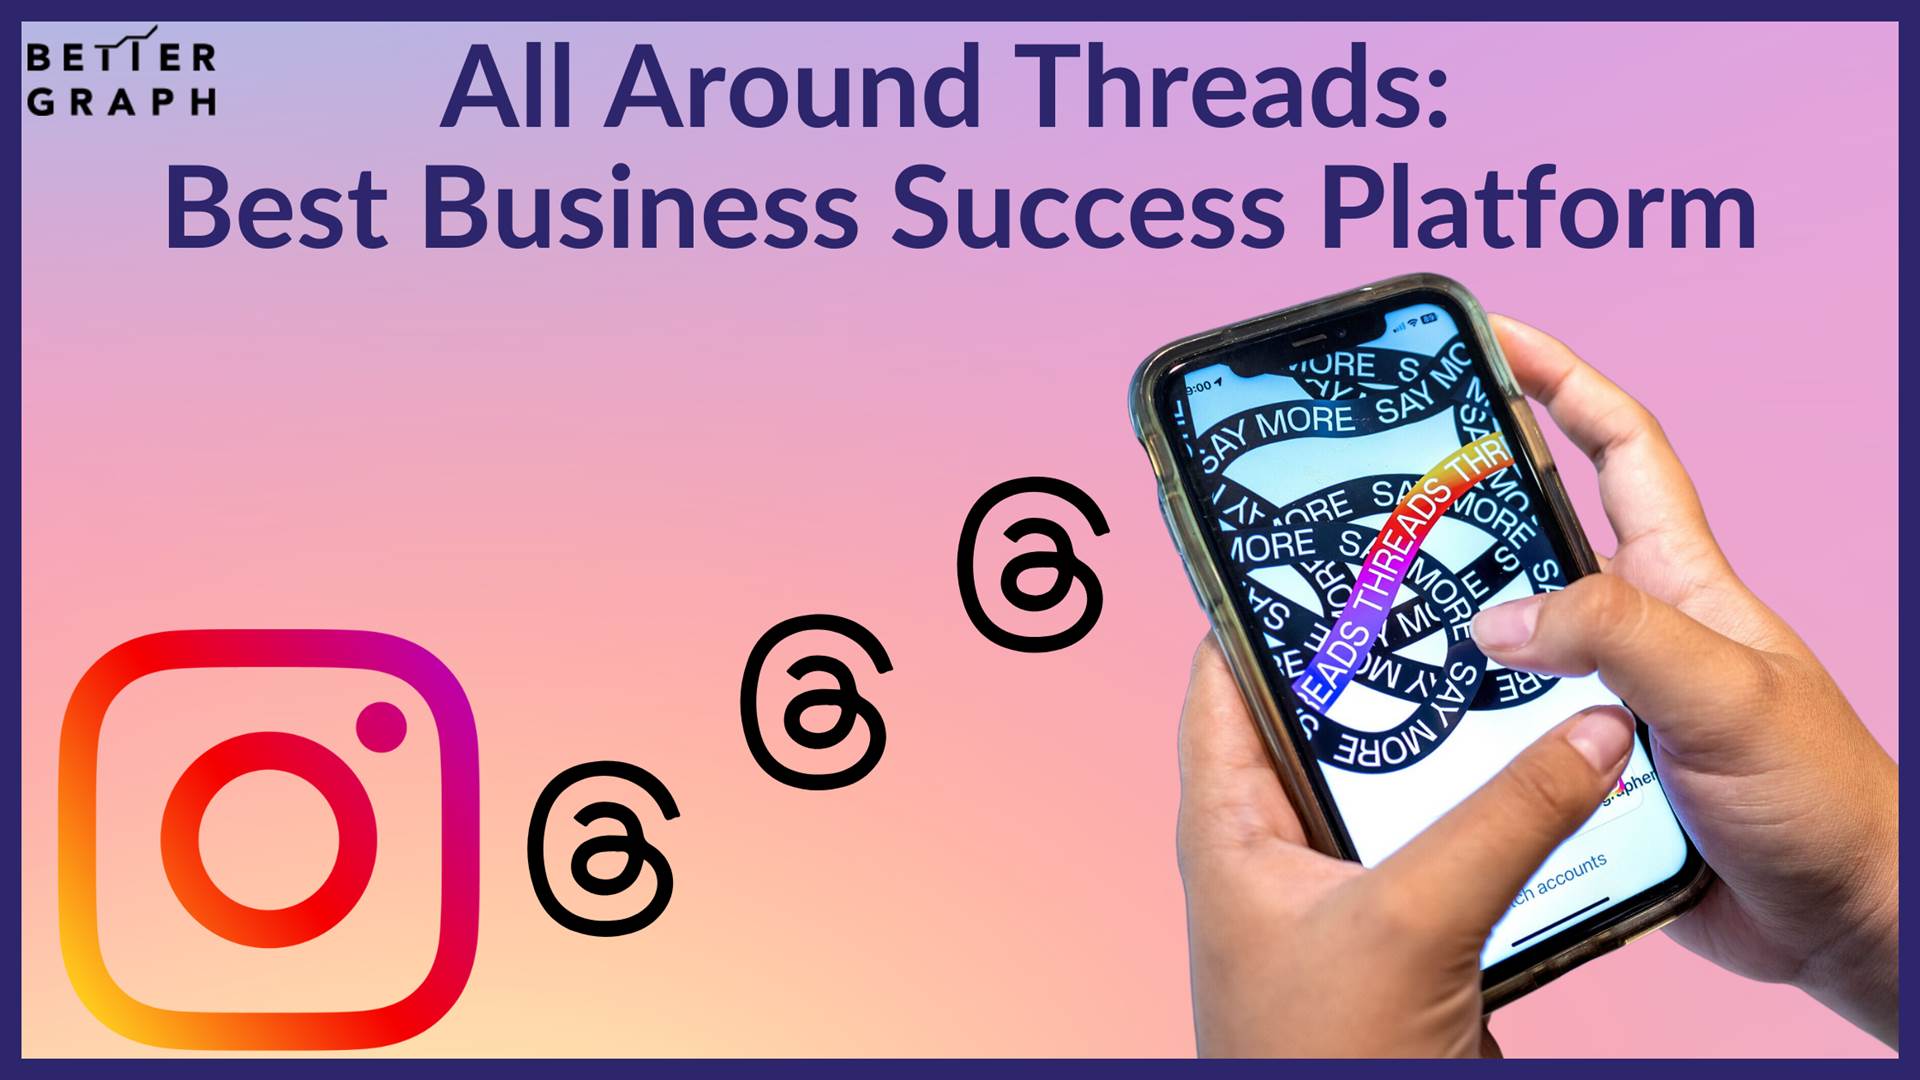 All Around Threads Best Business Success Platform (2).png  by BetterGraph